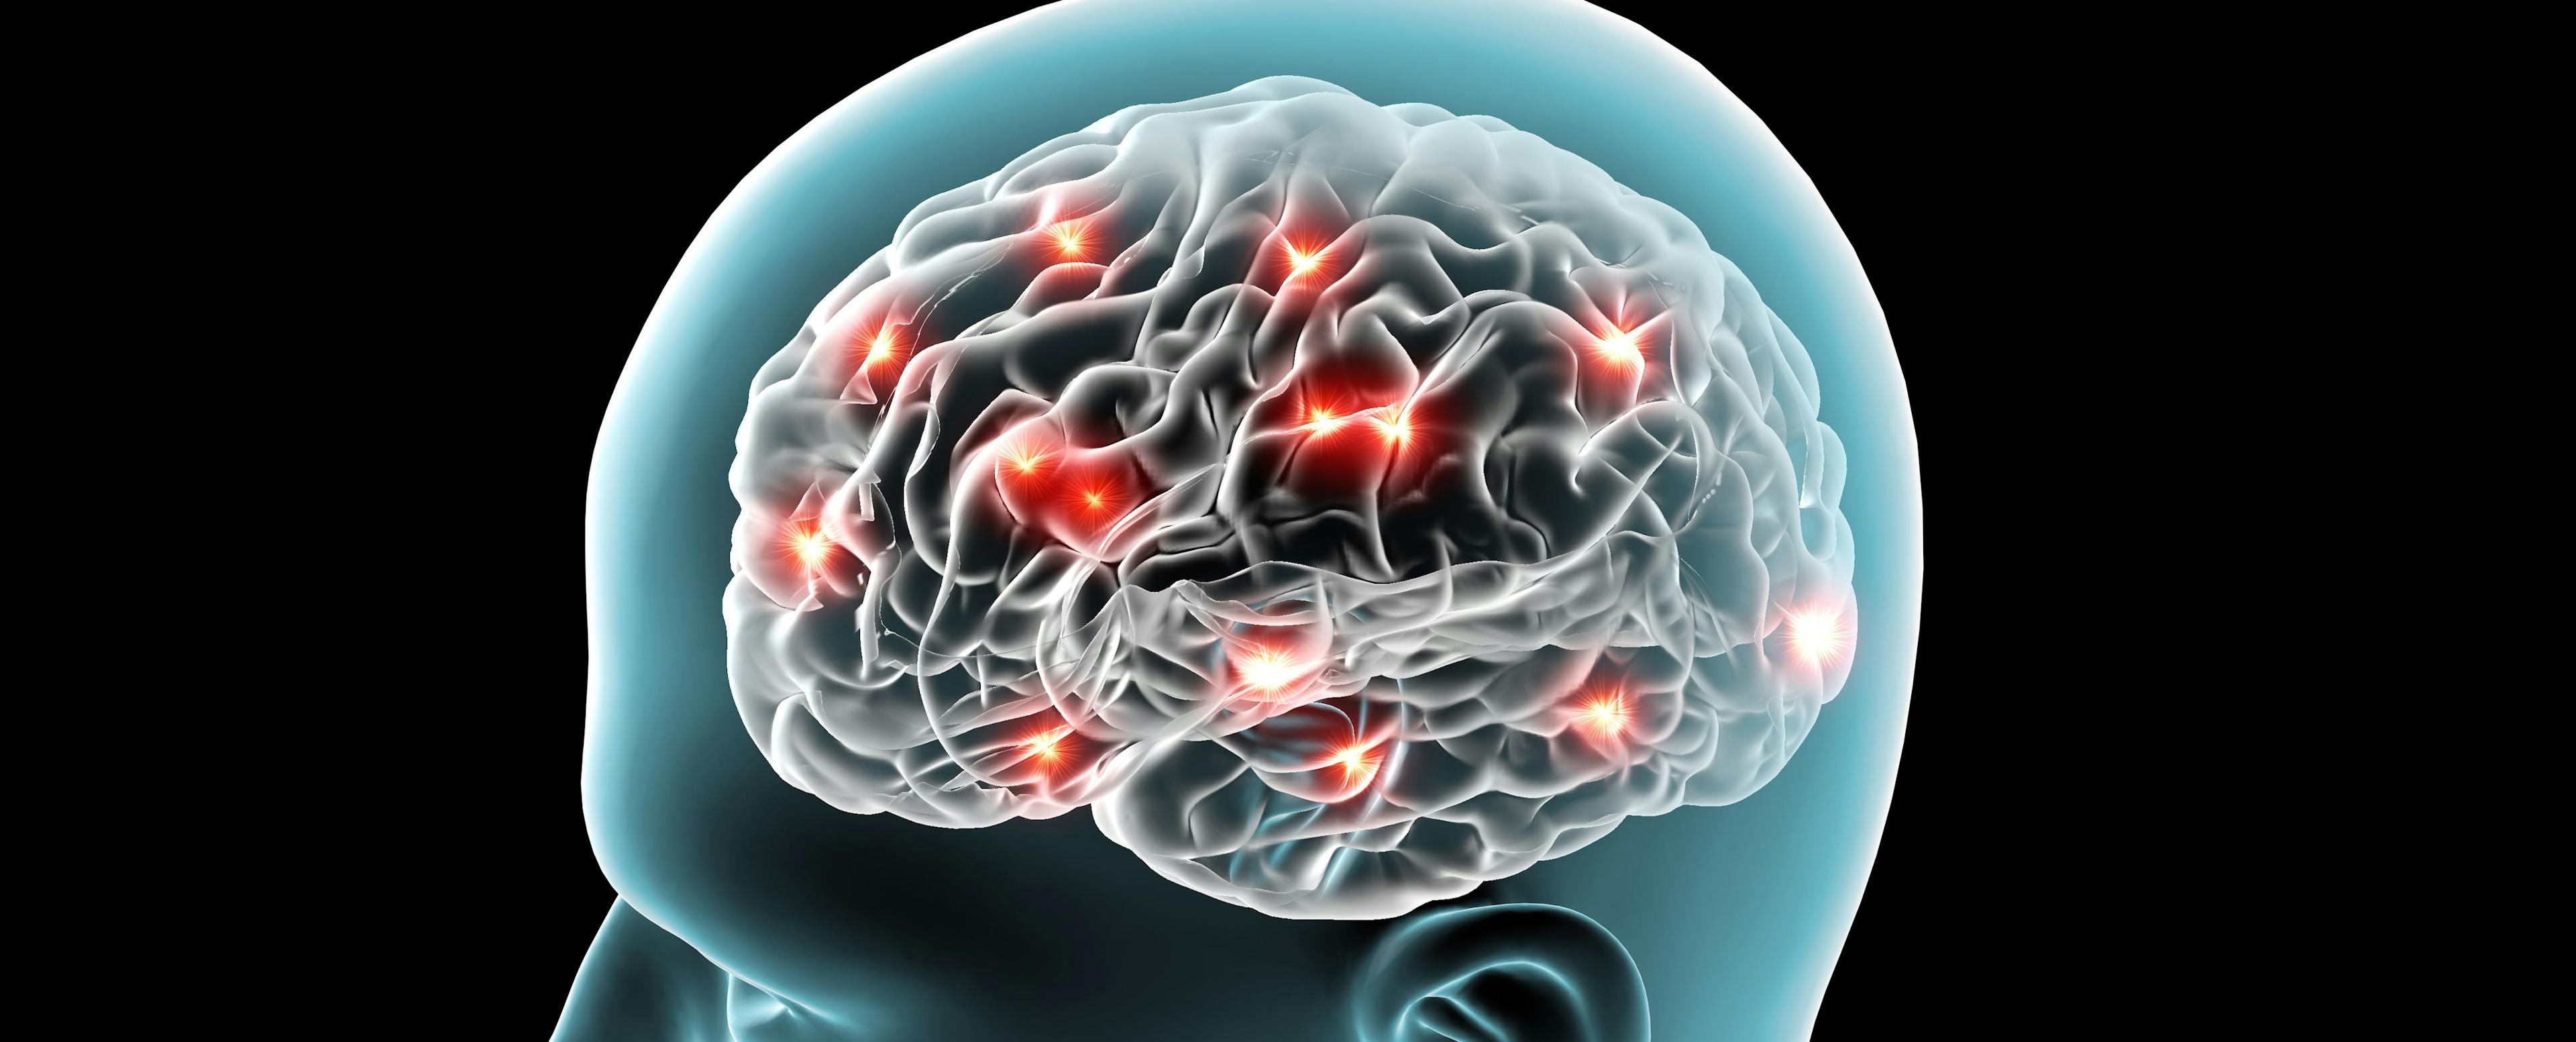 Brain Matter Loss in Bipolar Disorder Mirrors Other Mental Illnesses